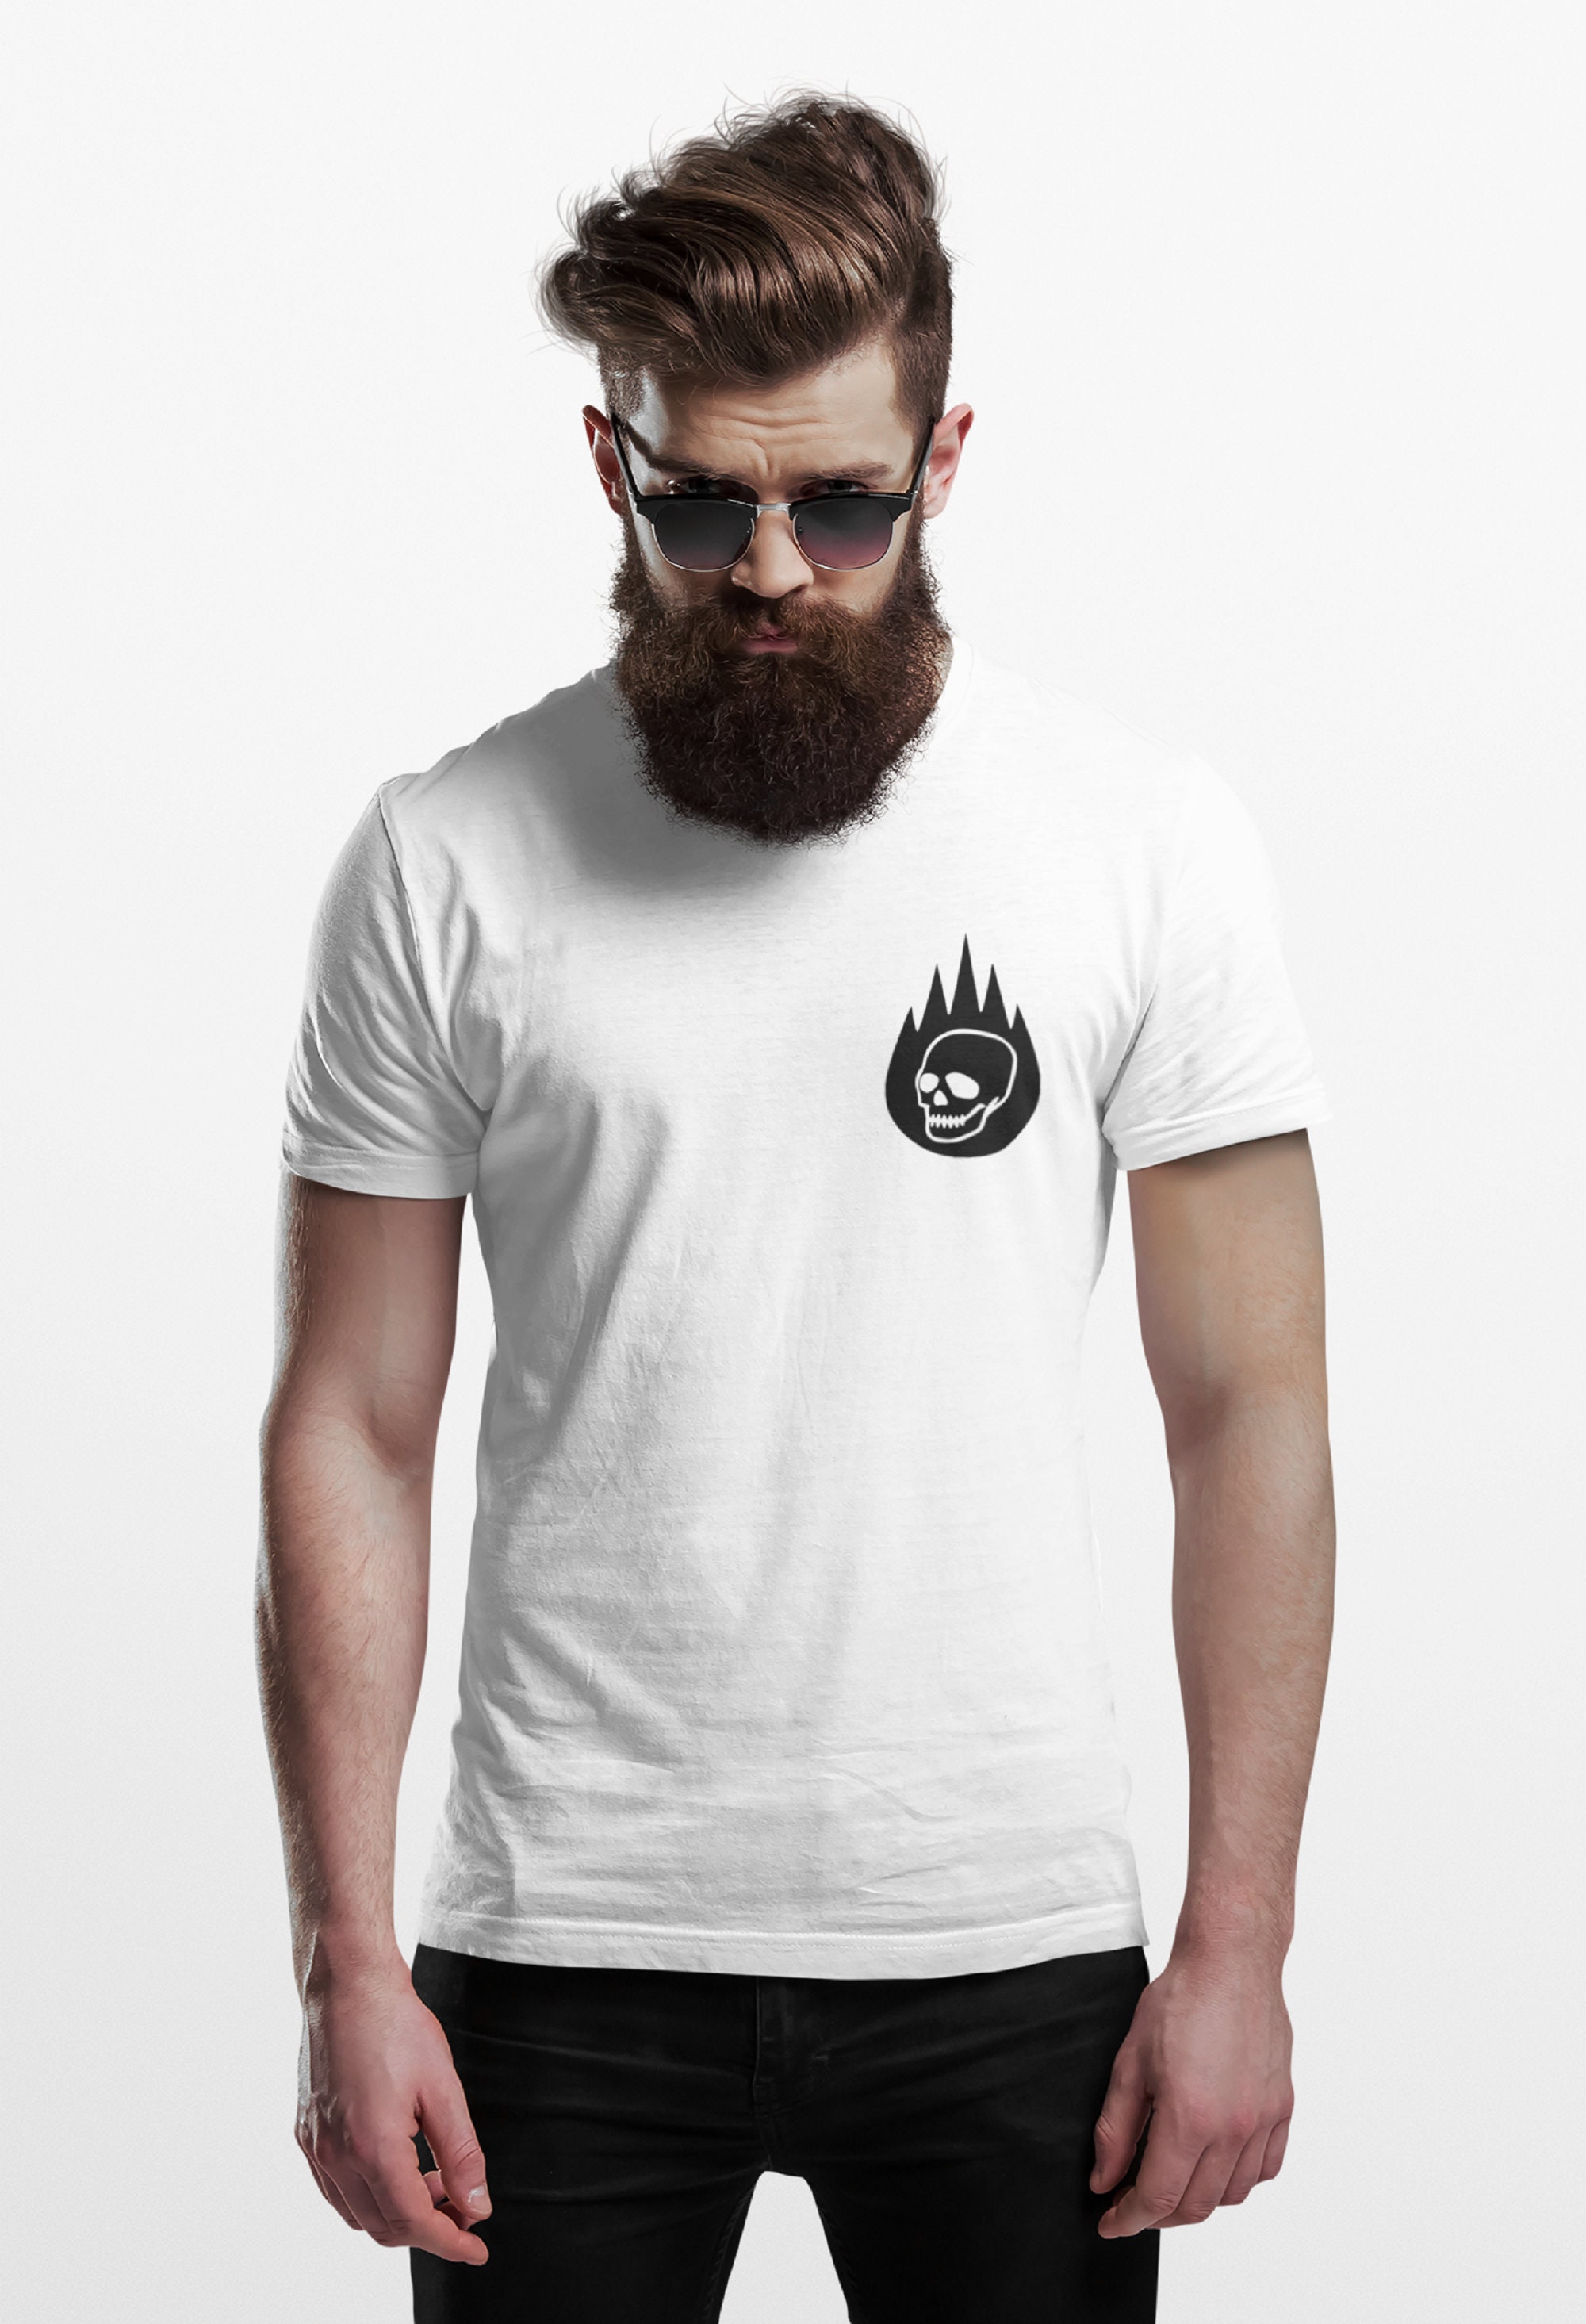 Fire Skull T-shirt Skull Shirt Fire Shirt Skull T-shirt | Etsy